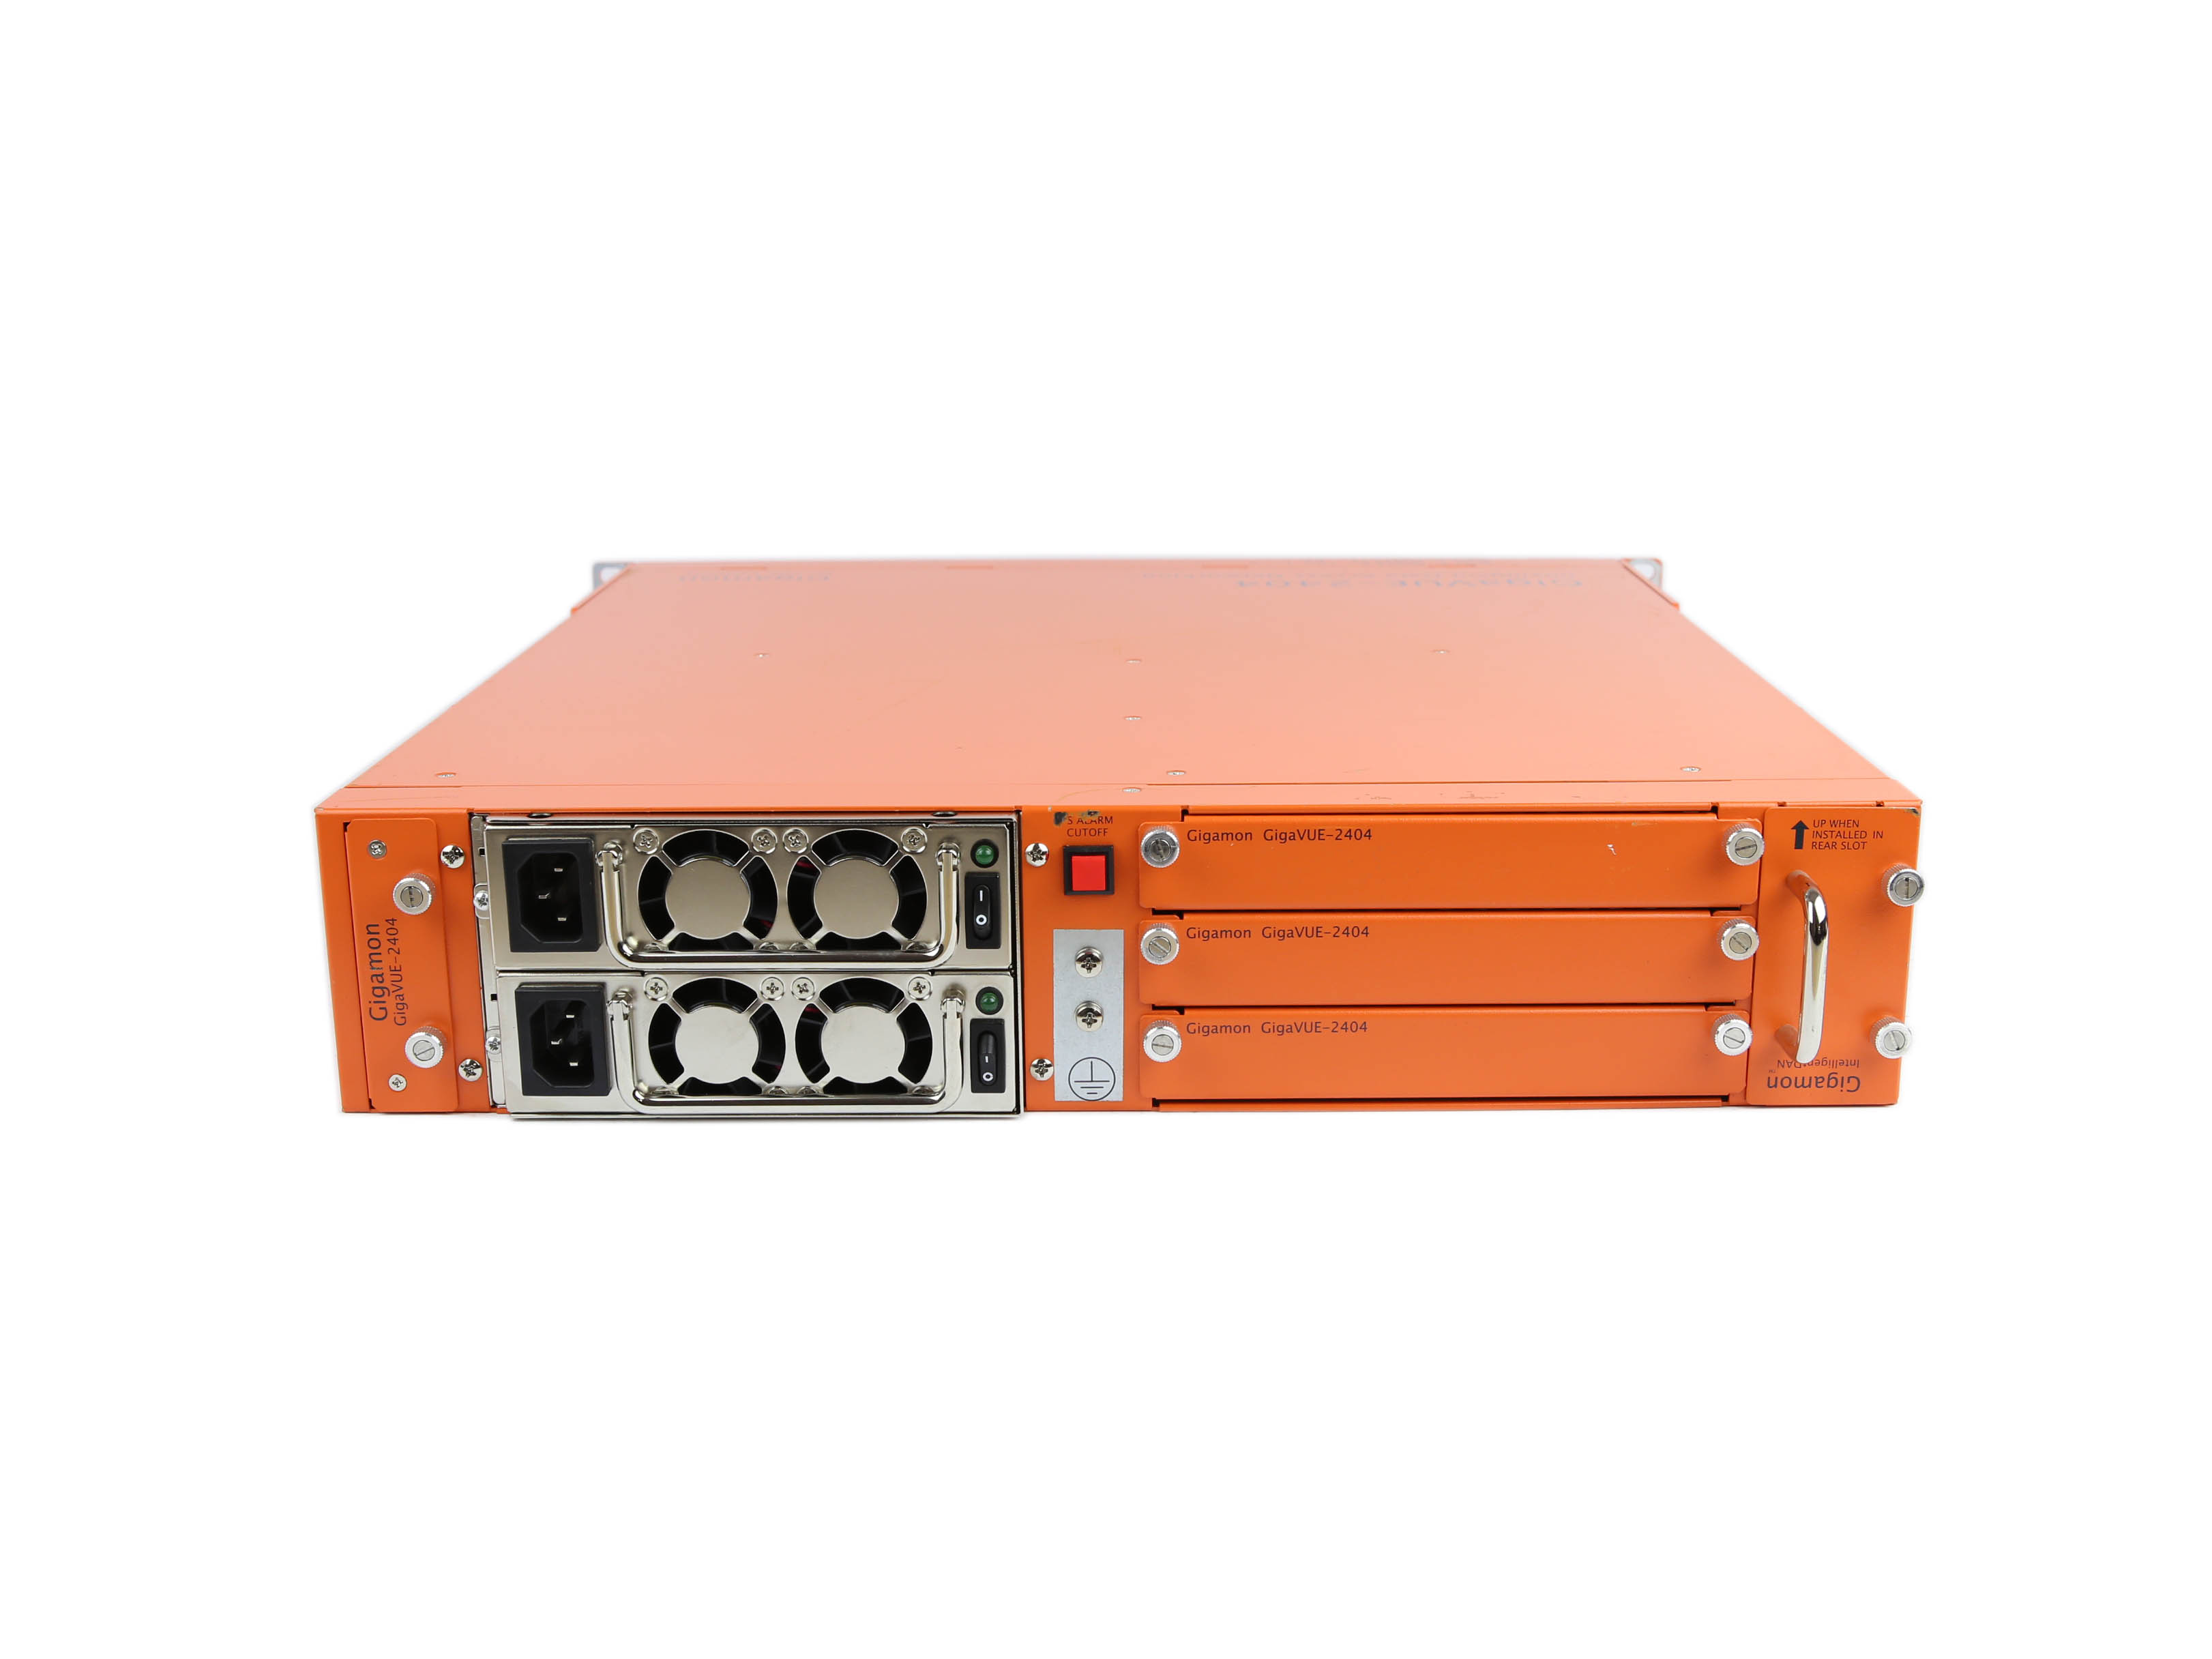 Firewall GIGAVUE-2404 GIGAVUE-2404MB 2X 10GIGATAP-4SR 2X MRW-6400P-R R Gigamon GigaVUE-2404 Intelligent Data Access Networking 4Ports SFP 1000Mbits 8Ports SFP+ 10Gbits And 2x 8 LC Splitter Ports Tap 4 Full Duplex 1Gbit Fibers 2x PSU 400W Managed Rails (5)